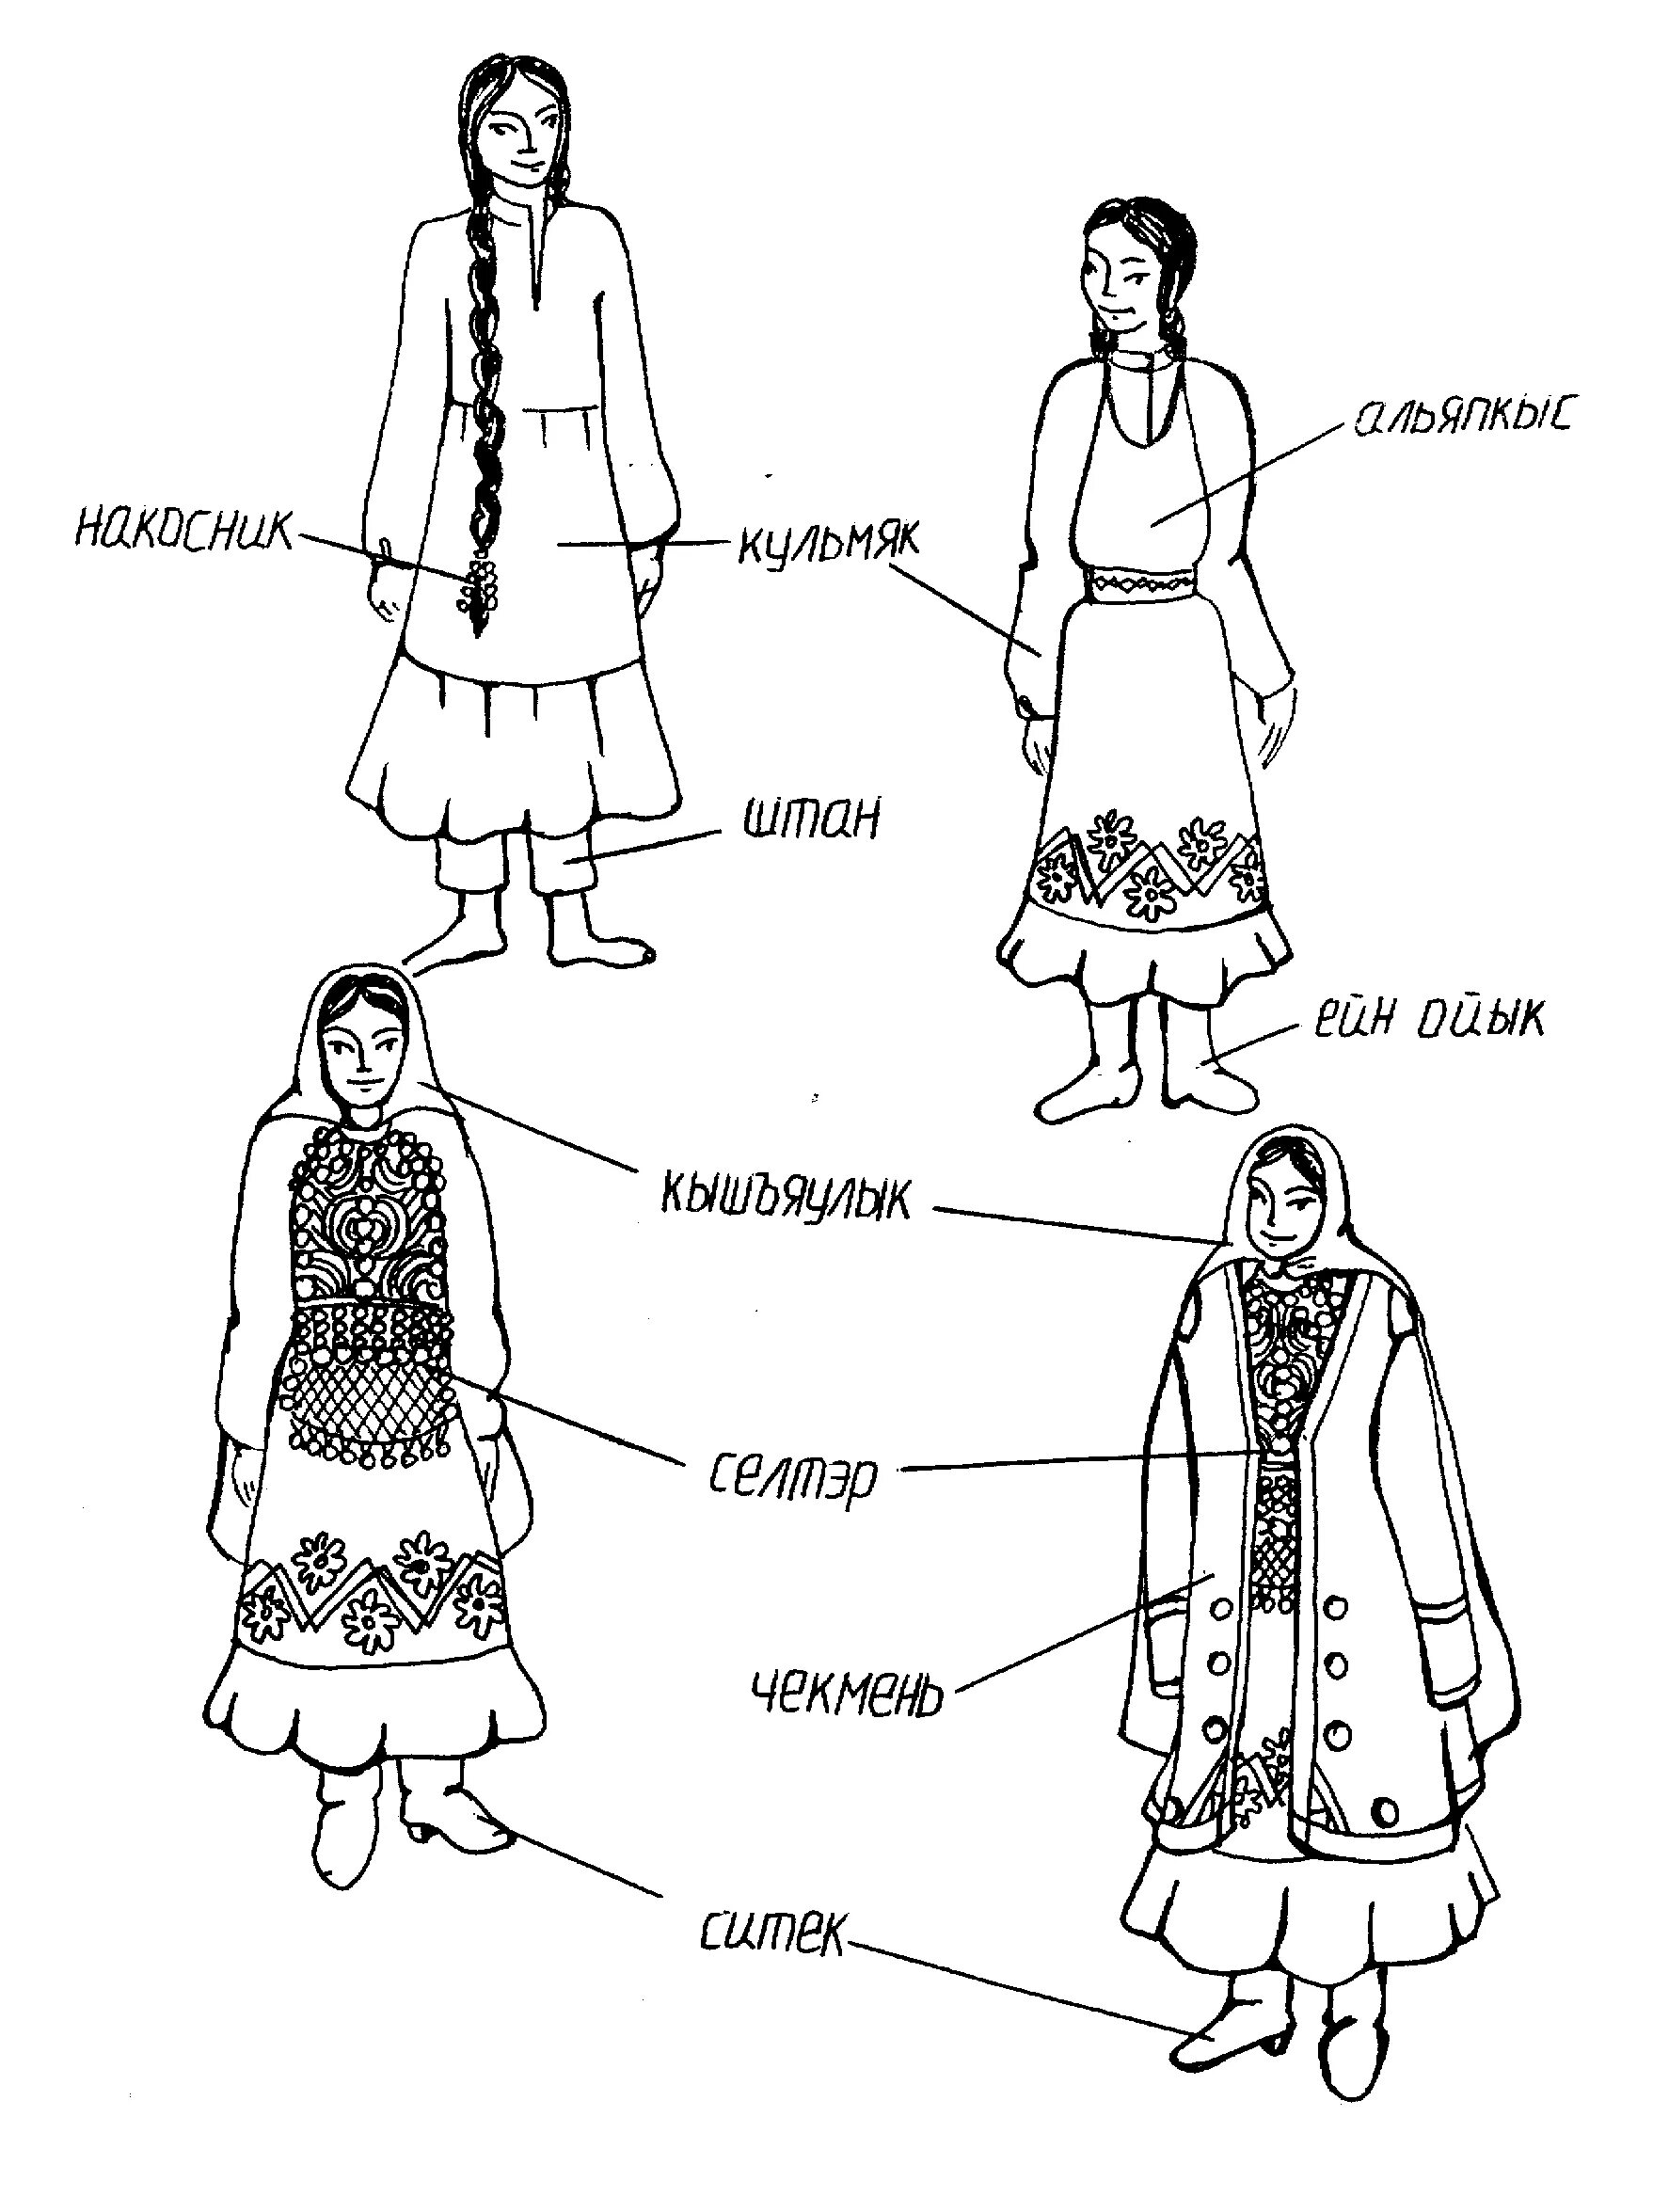 Artistic Bashkir national costume